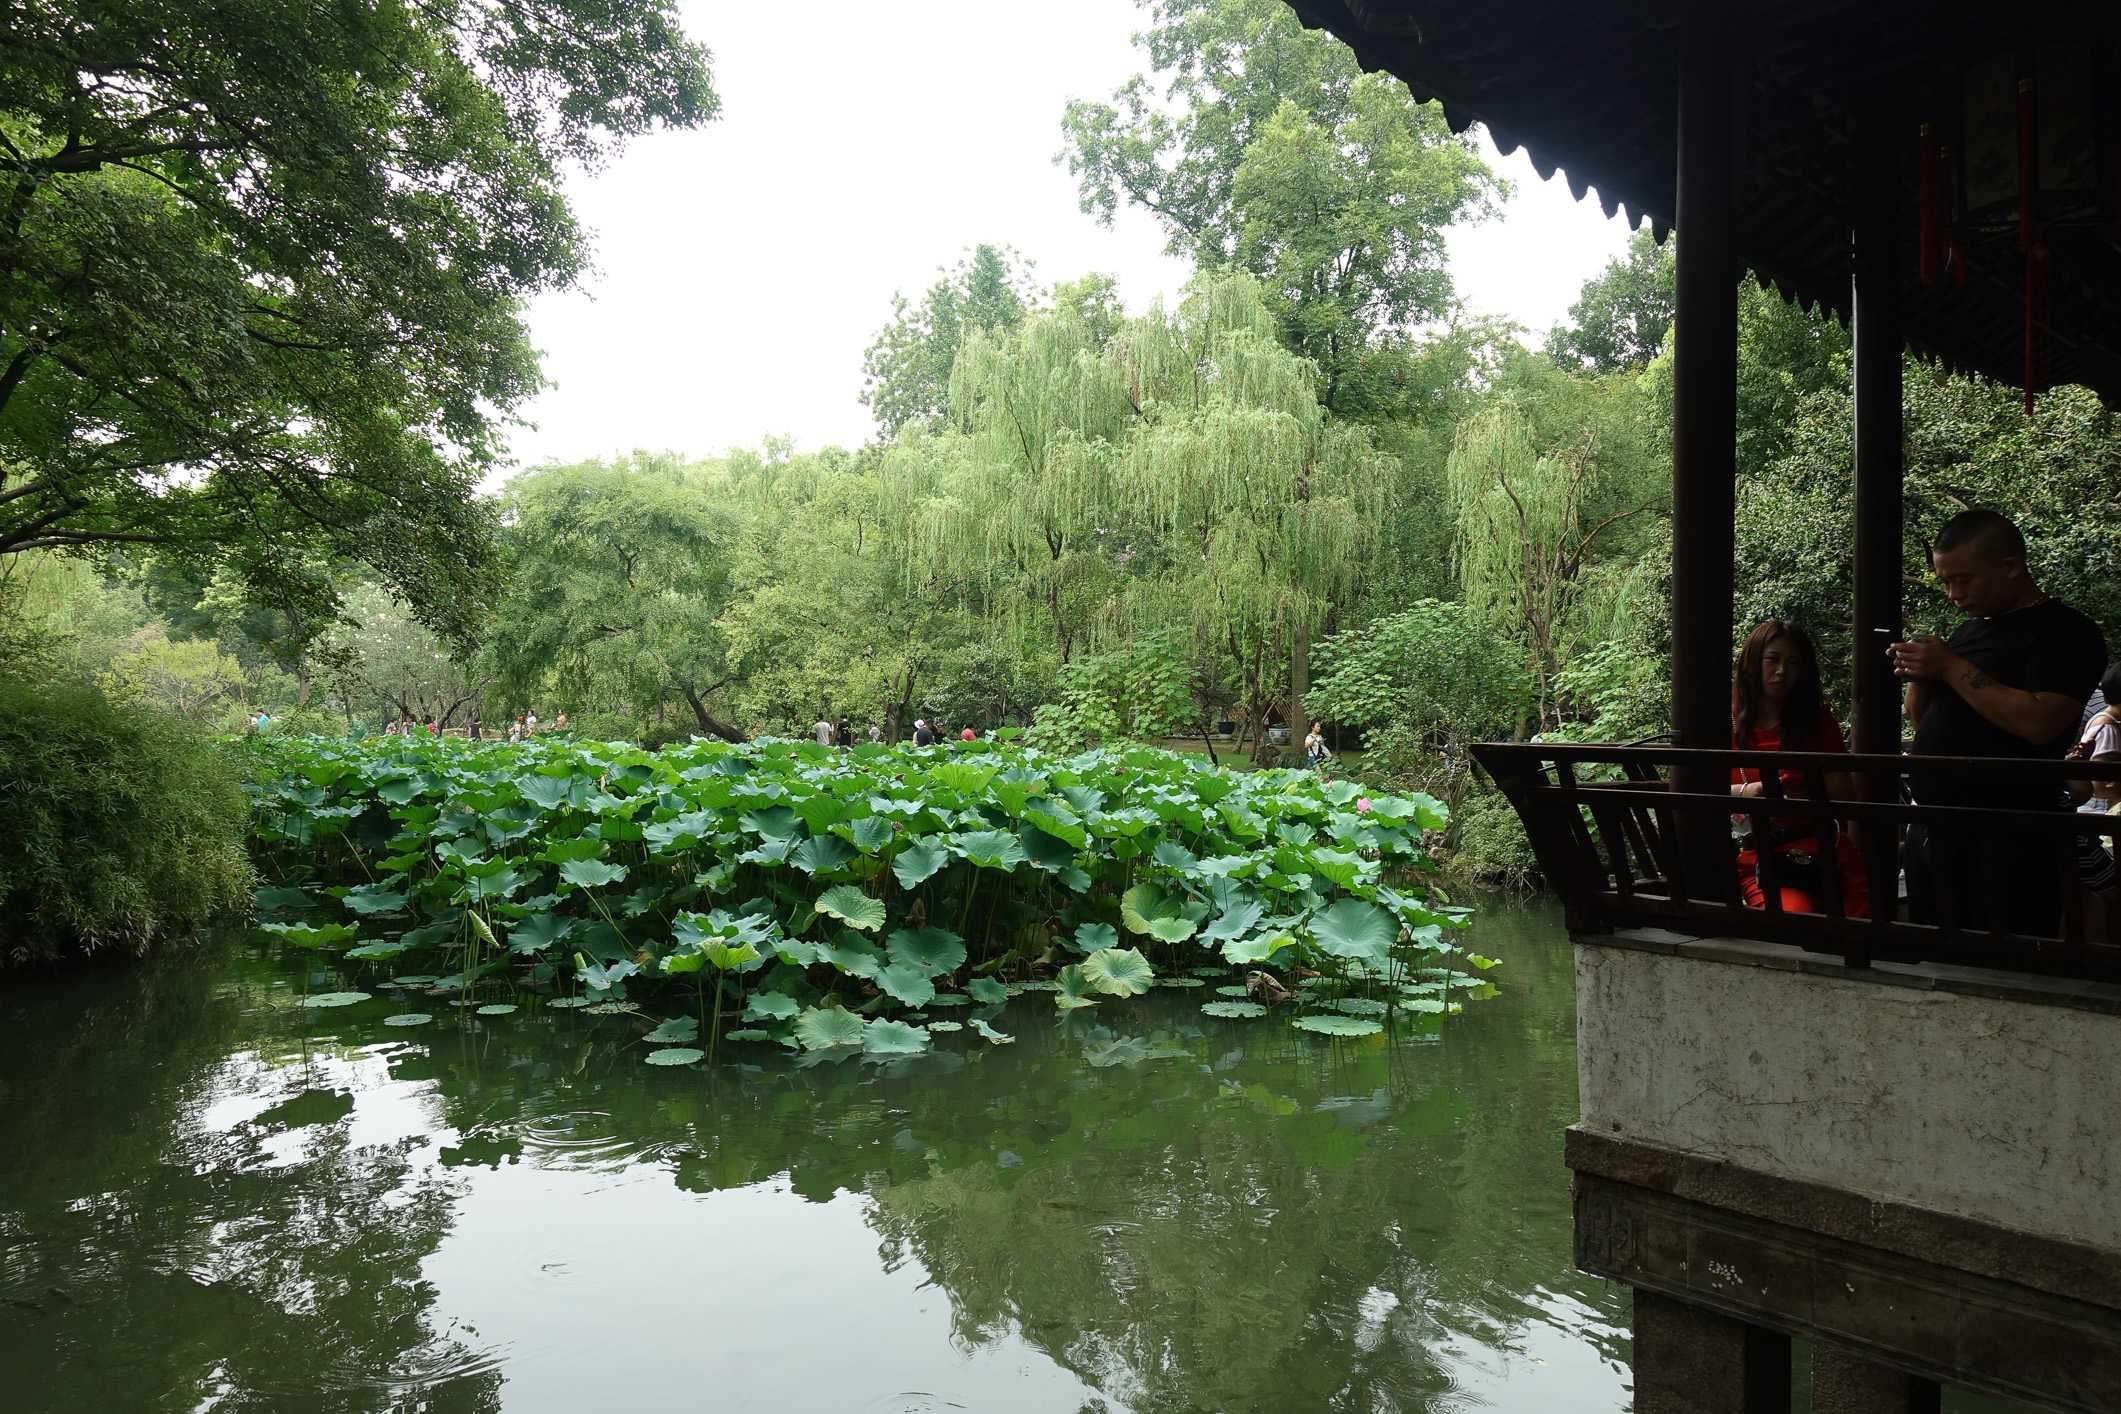 Gardens in Suzhou